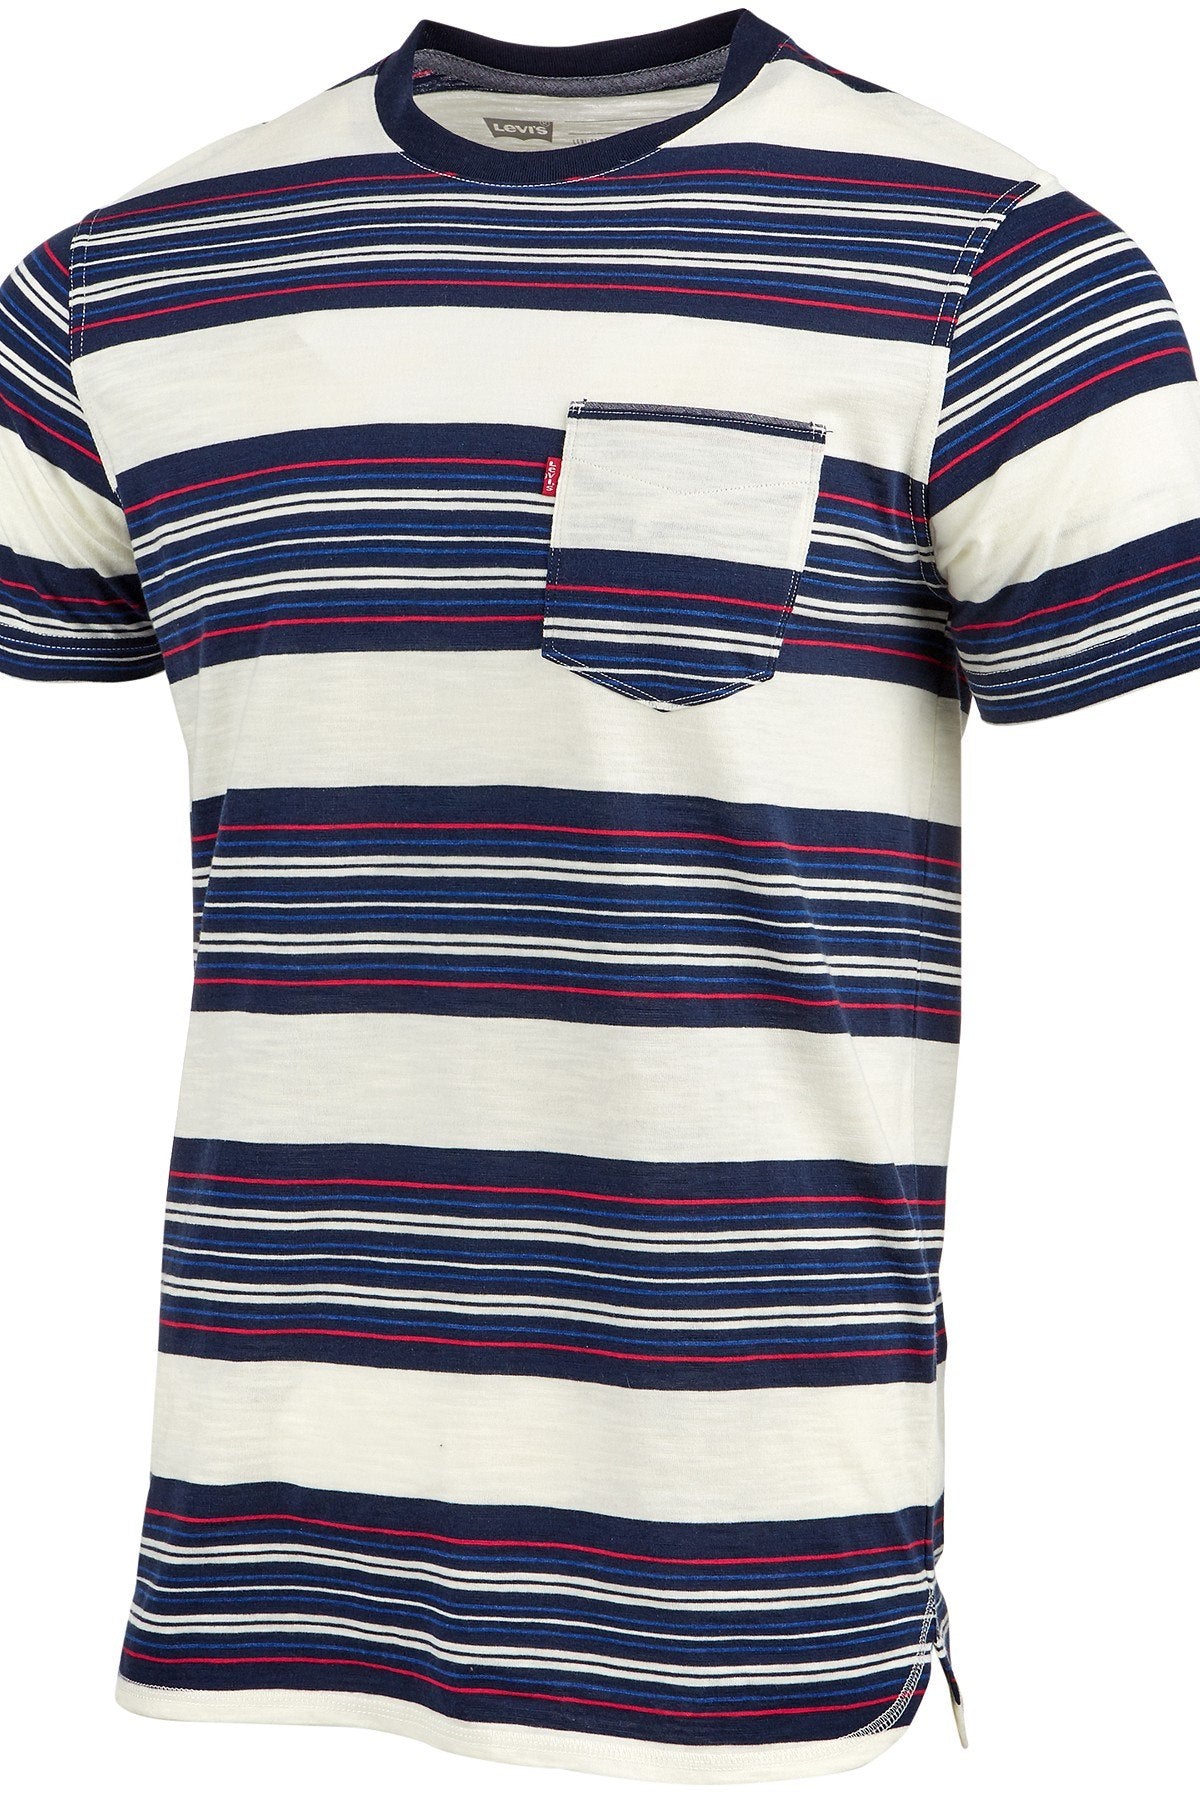 Levi's Hedley Striped Shirt